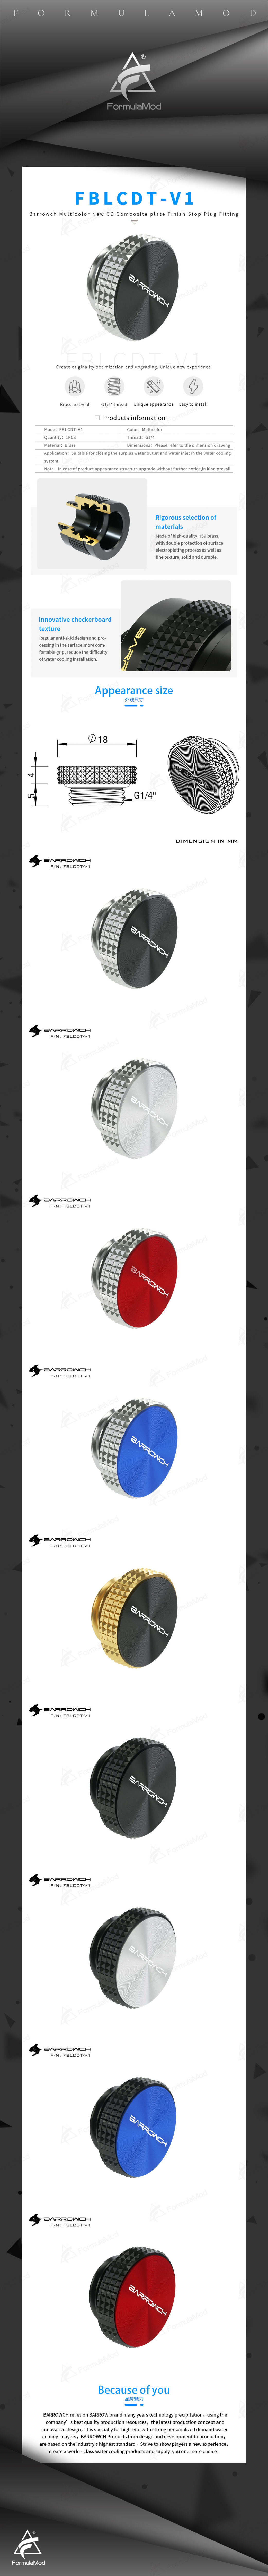 Barrowch CD Pattern Composite Plug, Multi-color Hand Twisted Water Cooling Lock, Black/Silver/Gold Body Plug, FBLCDT-V1  